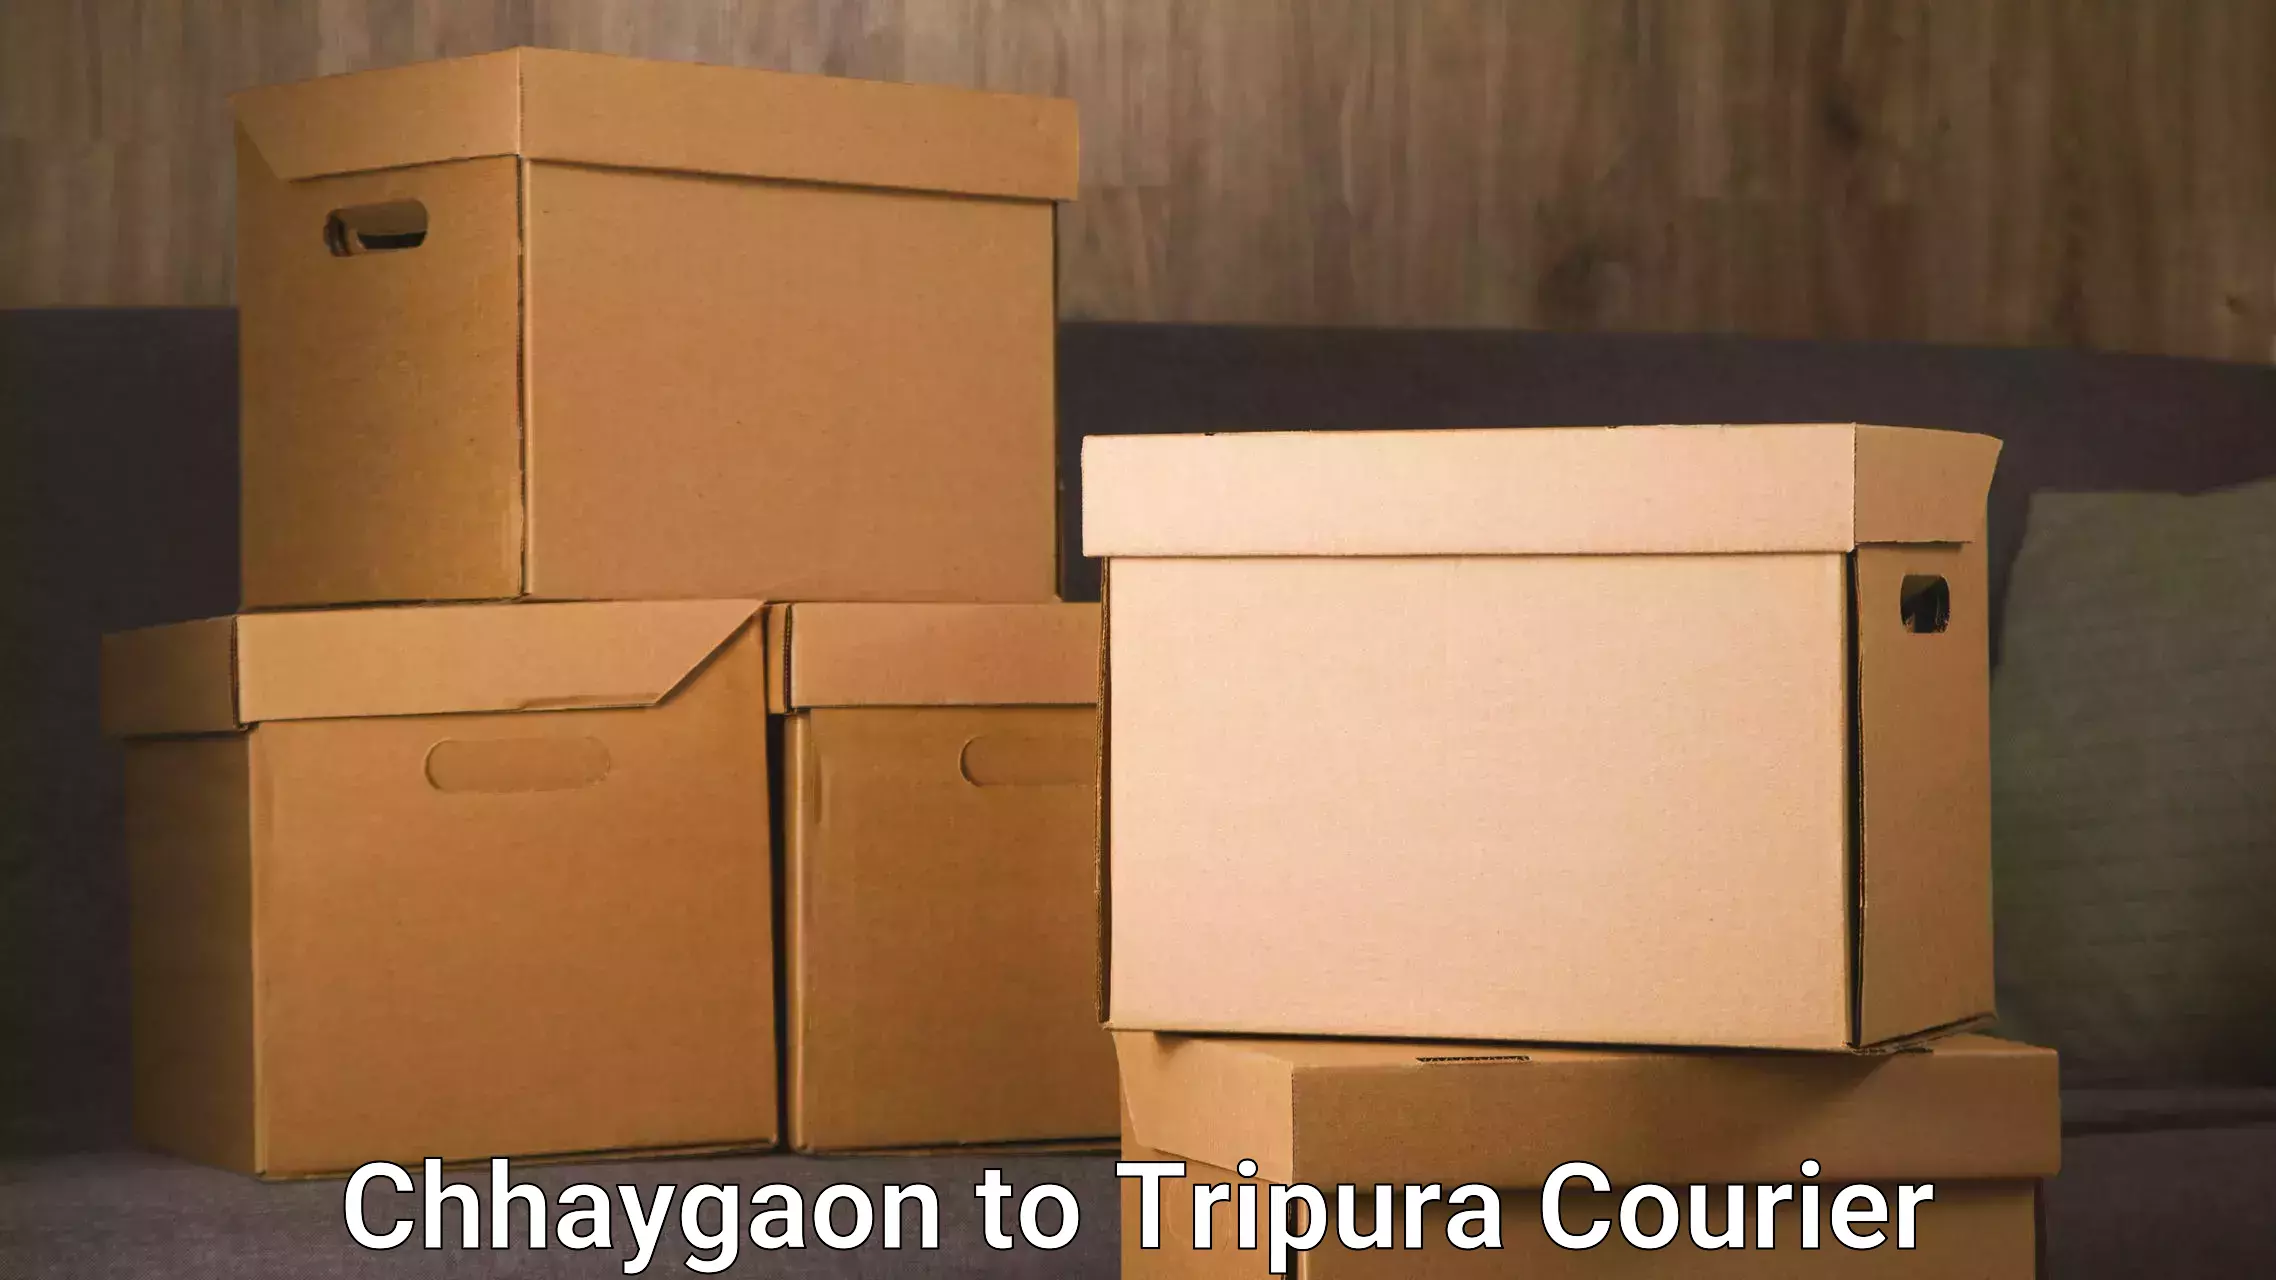 Digital courier platforms Chhaygaon to Udaipur Tripura